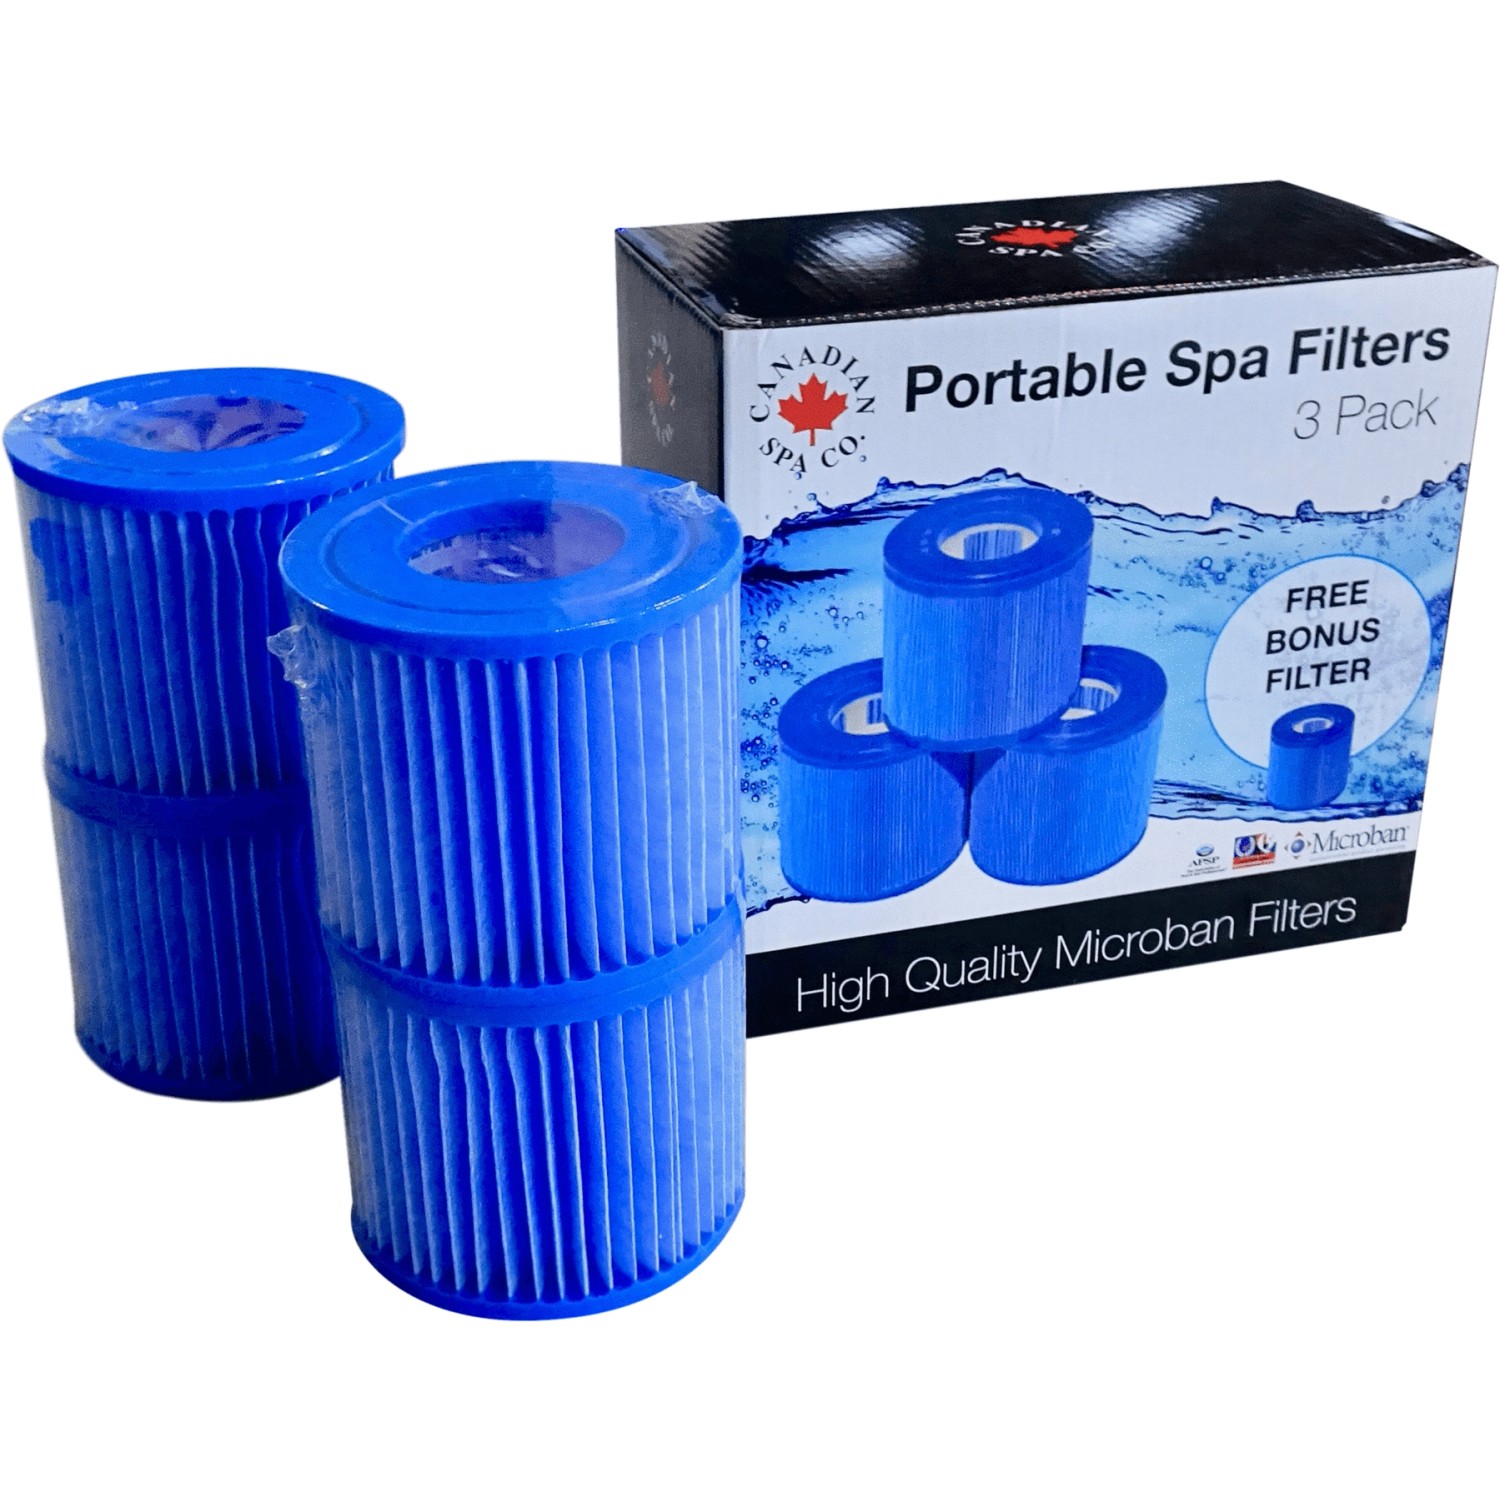 Canadian Spa Filter-Set für portable Whirlpools 4 Stück